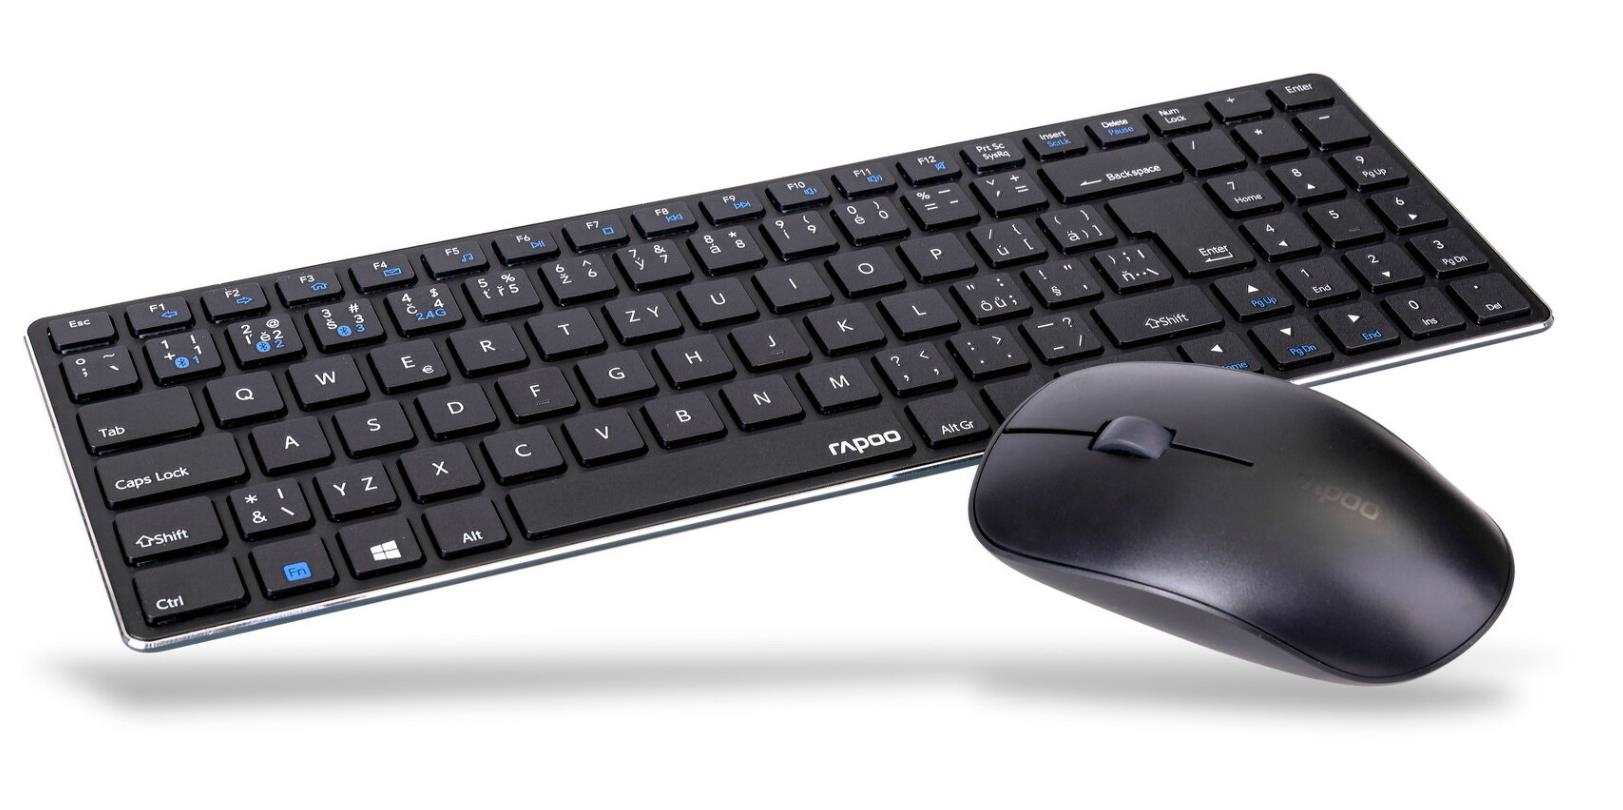 Súprava klávesnice a myši RAPOO 9300M,  bezdrôtová viacrežimová tenká myš a ultratenká klávesnica,  čierna1 